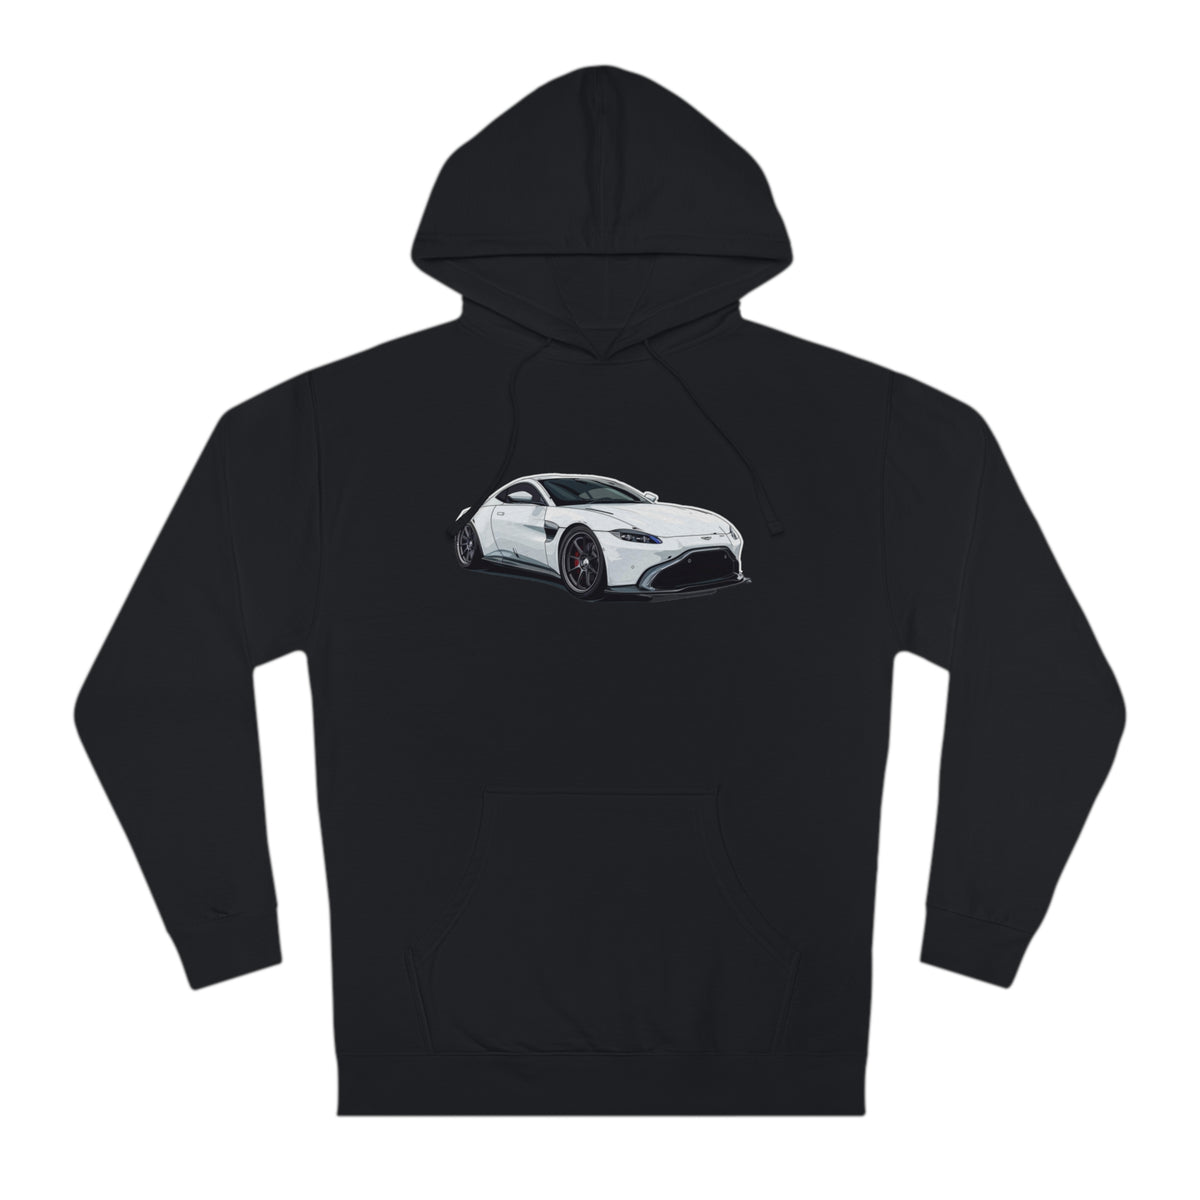 Pure Performance Men’s Hoodie with Aston Martin Vantage Graphic Hooded Sweatshirt